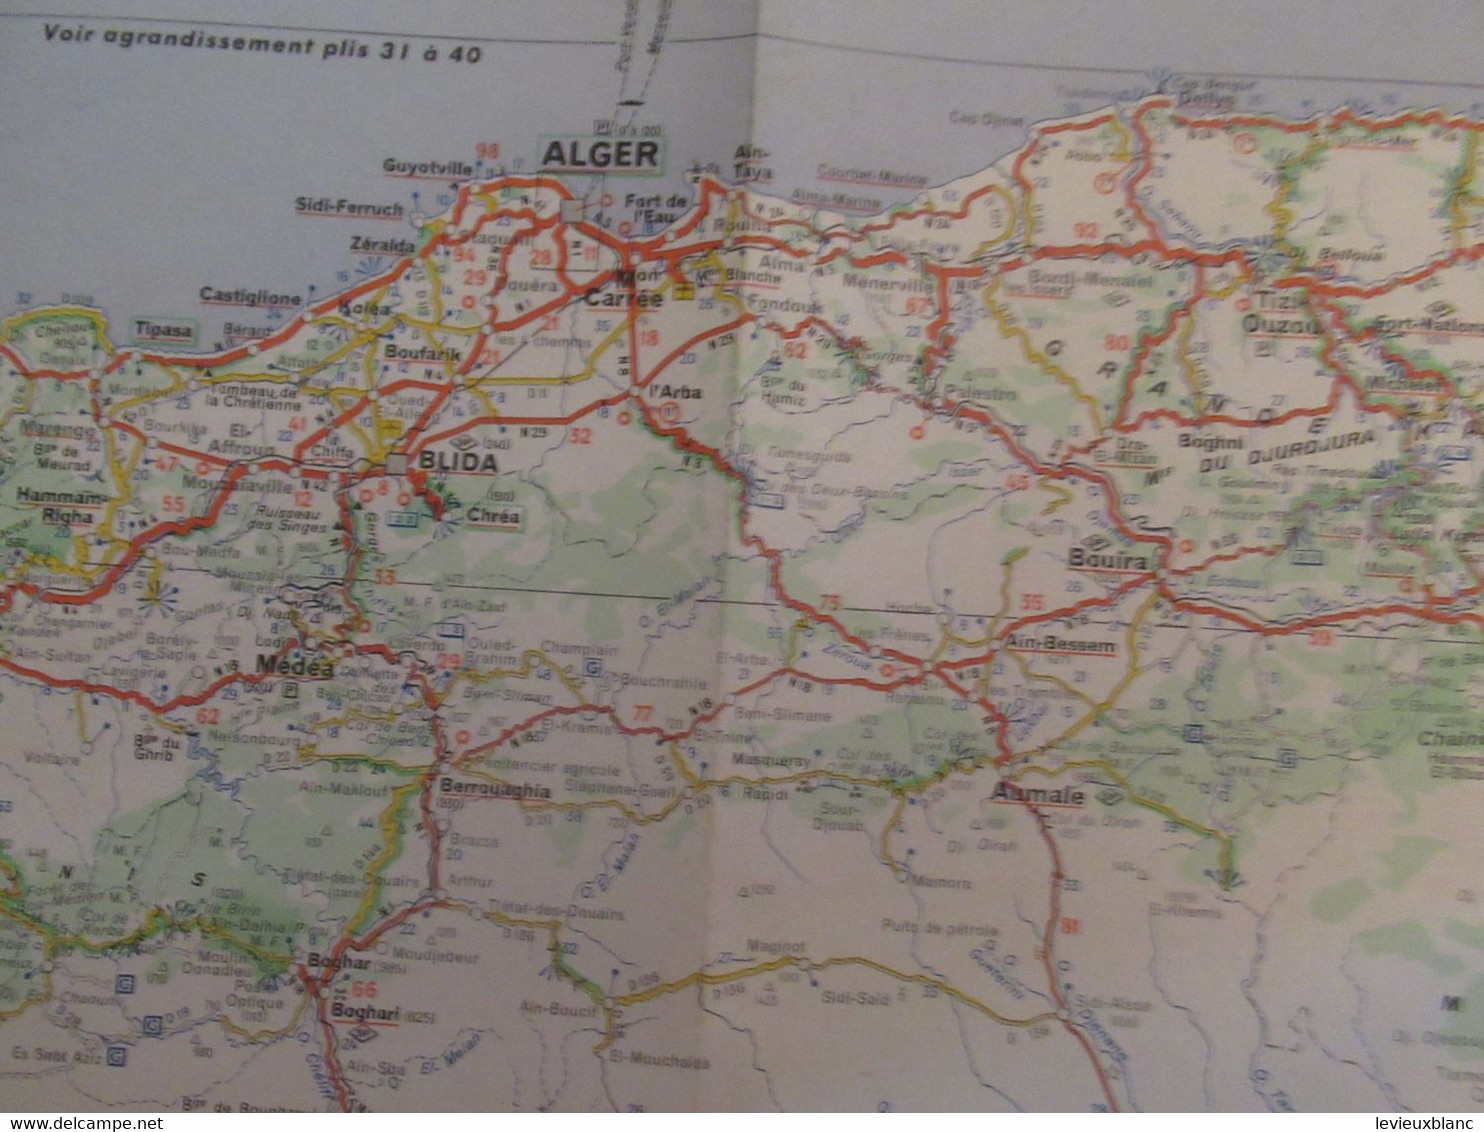 Carte routiére ancienne / ALGERIE-TUNISIE/ Carte 172 MICHELIN/Pneu Michelin/ /1958   PGC468